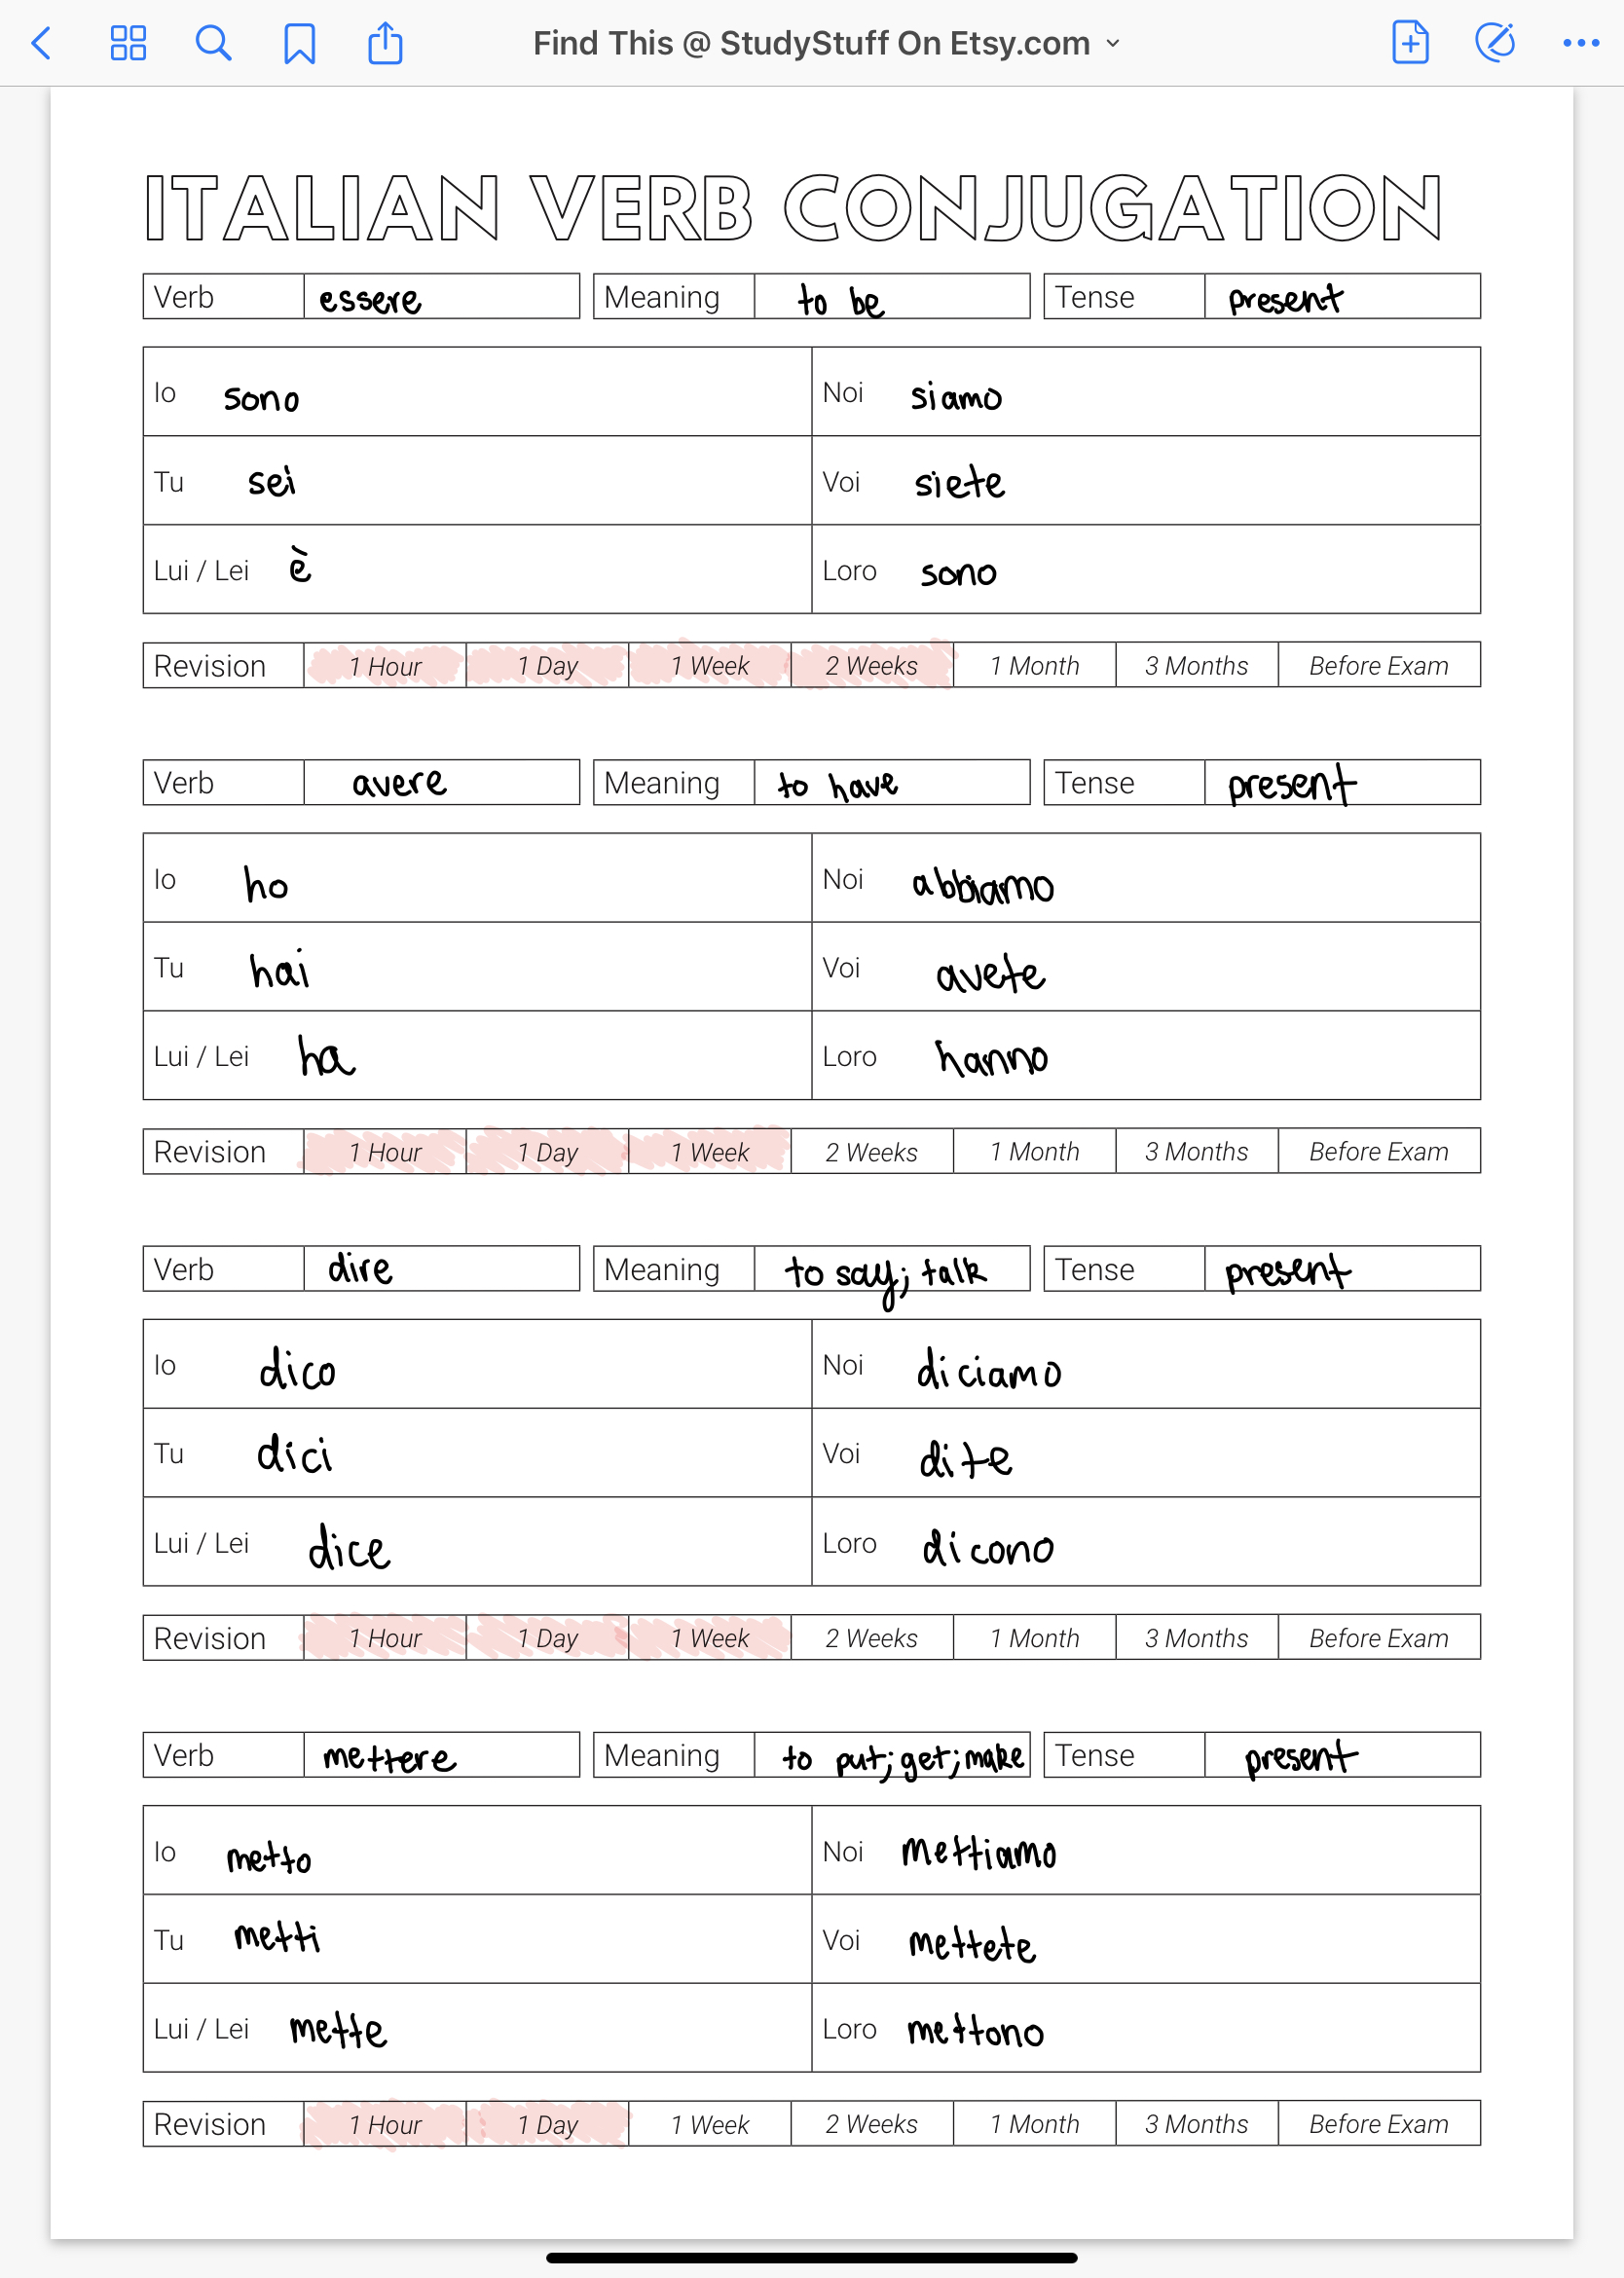 english-worksheets-verb-to-do-conjugation-worksheet